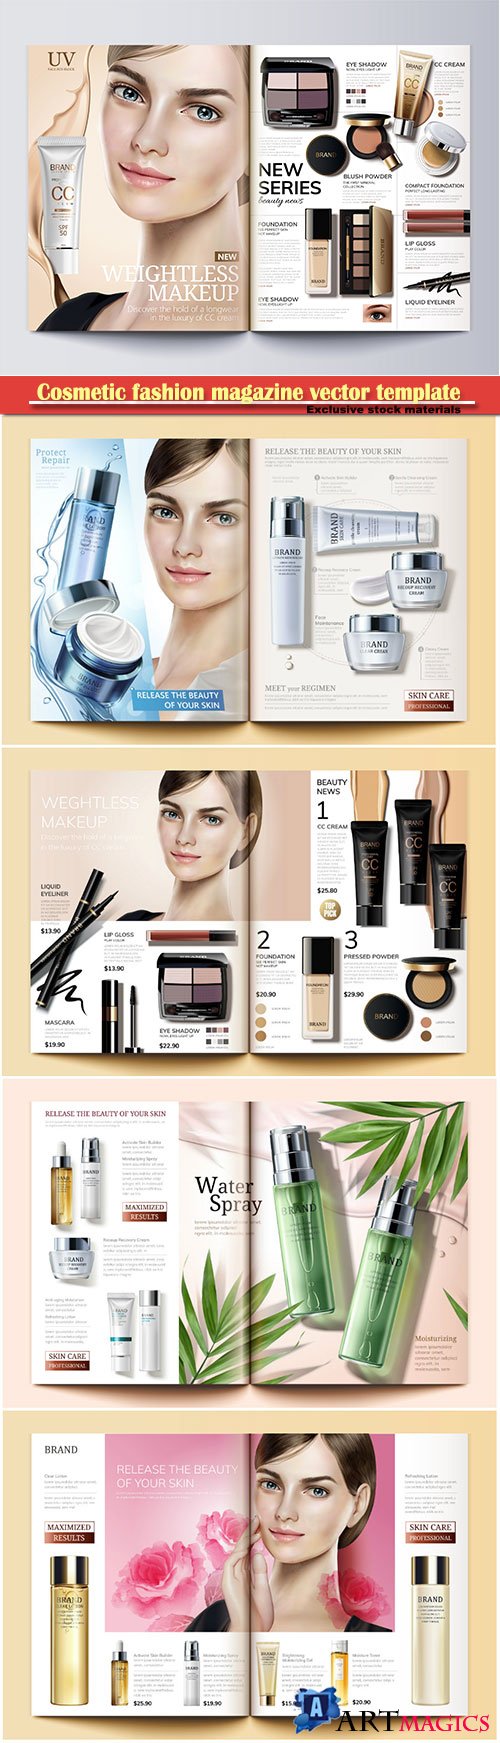 Cosmetic fashion magazine vector template #3